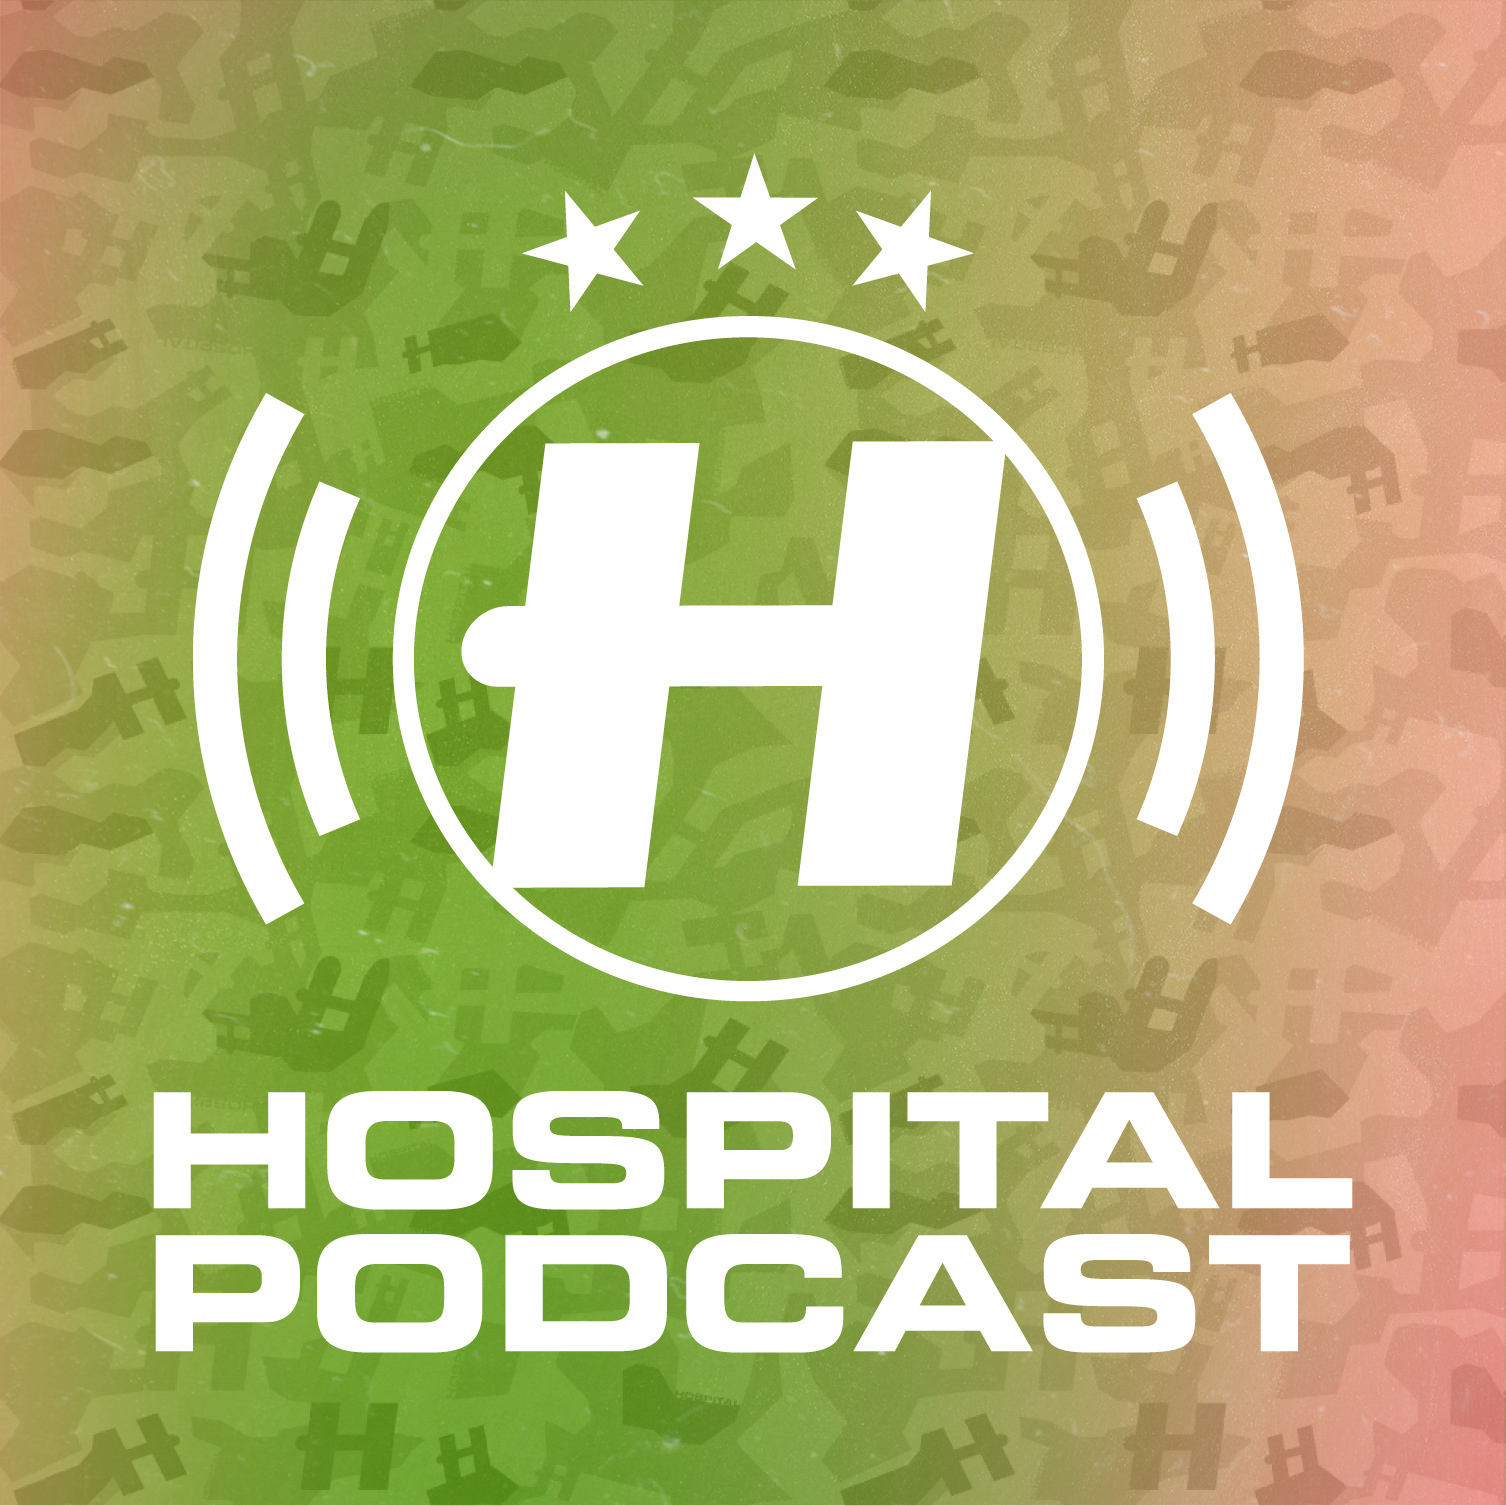 Hospital Podcast 387 with London Elektricity ~ Live from Prague Artwork